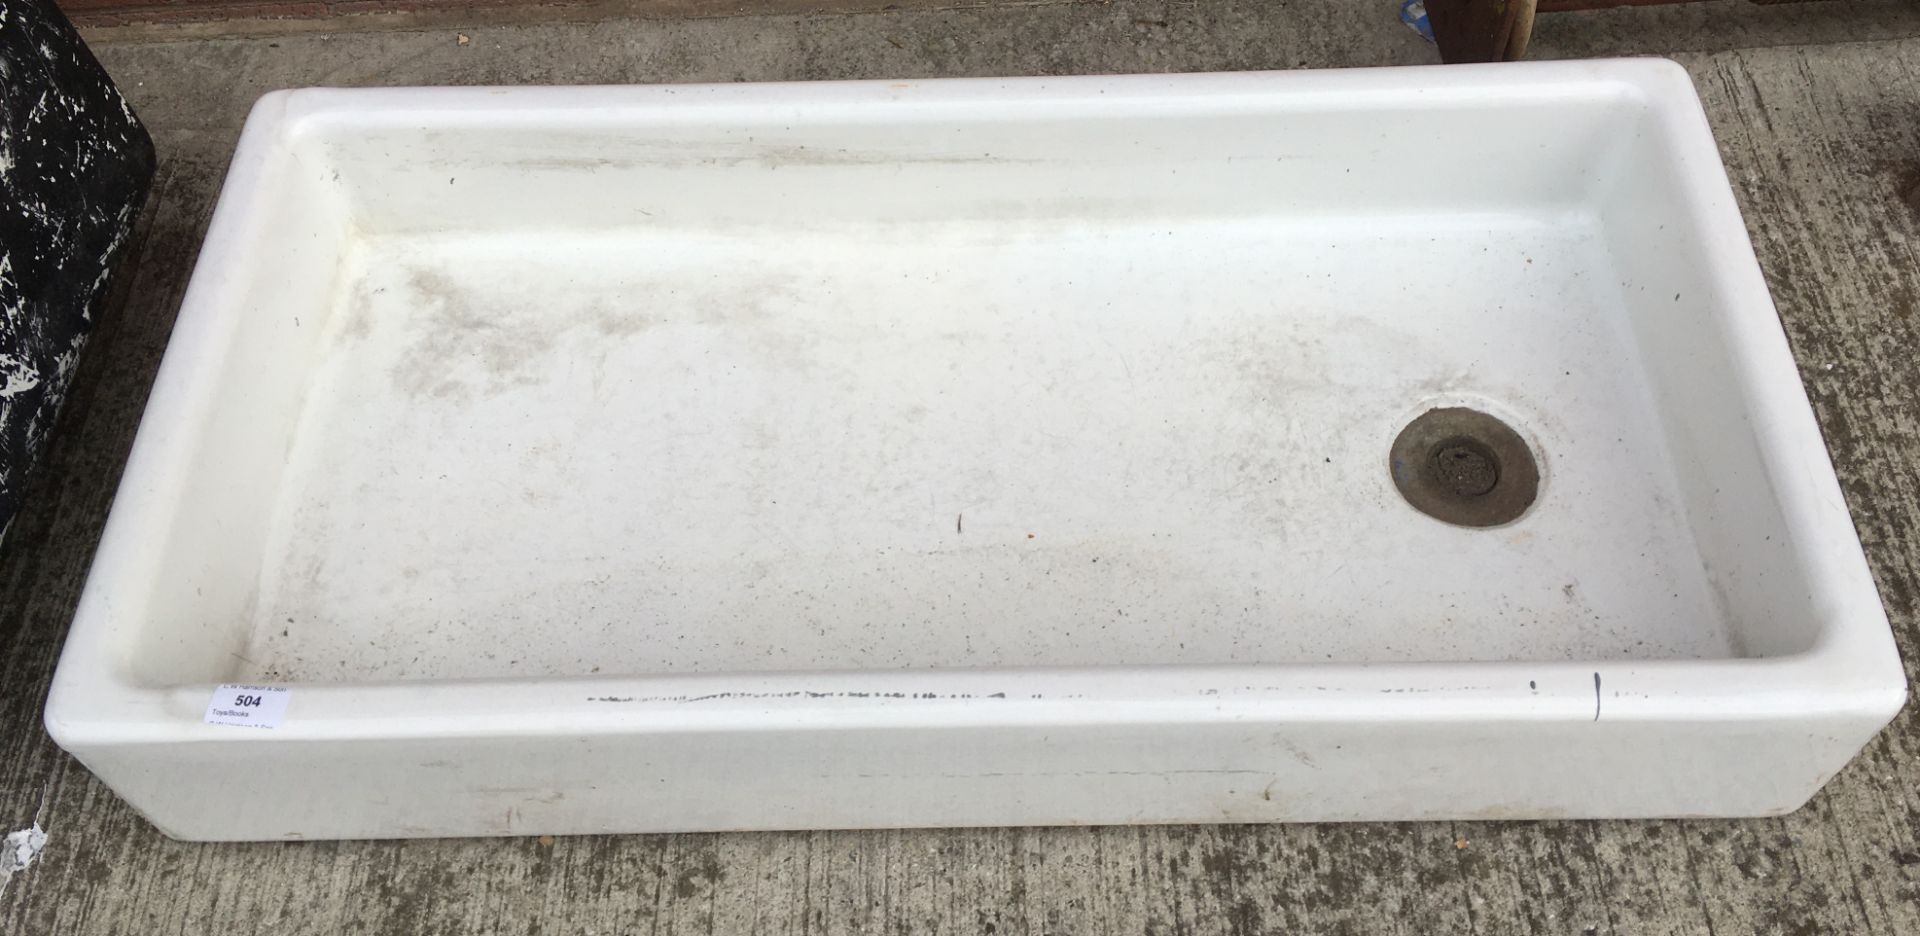 A white glazed sink/planter 90 x 45 x 12cm deep